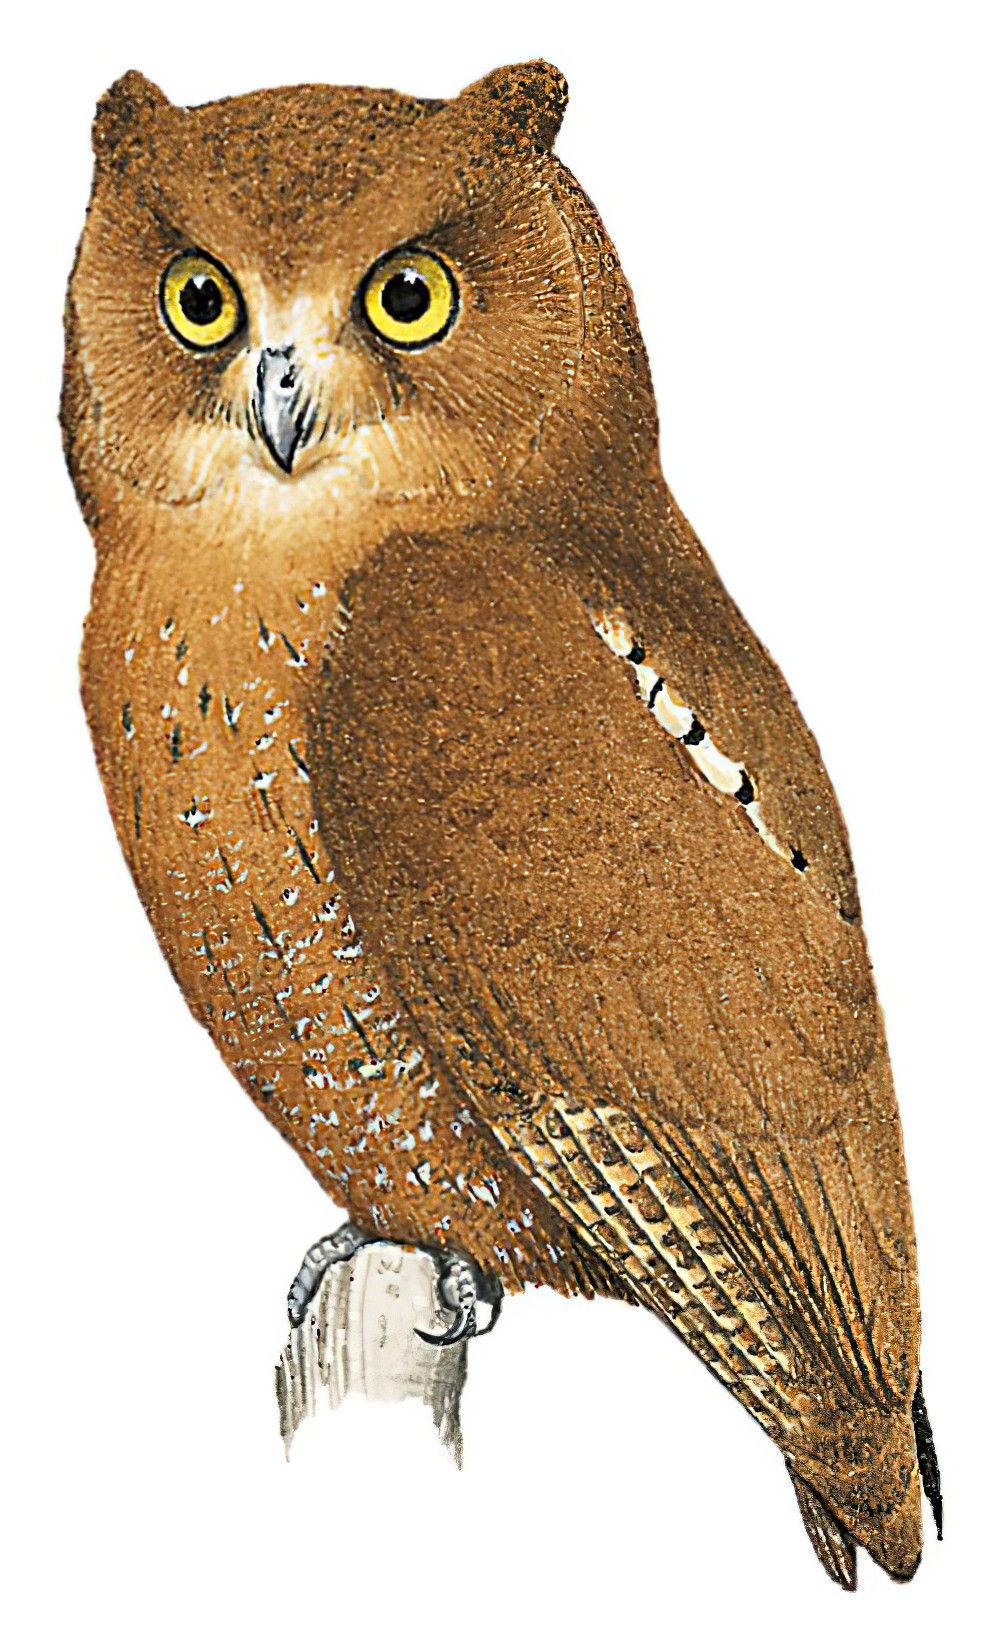 Simeulue Scops-Owl / Otus umbra